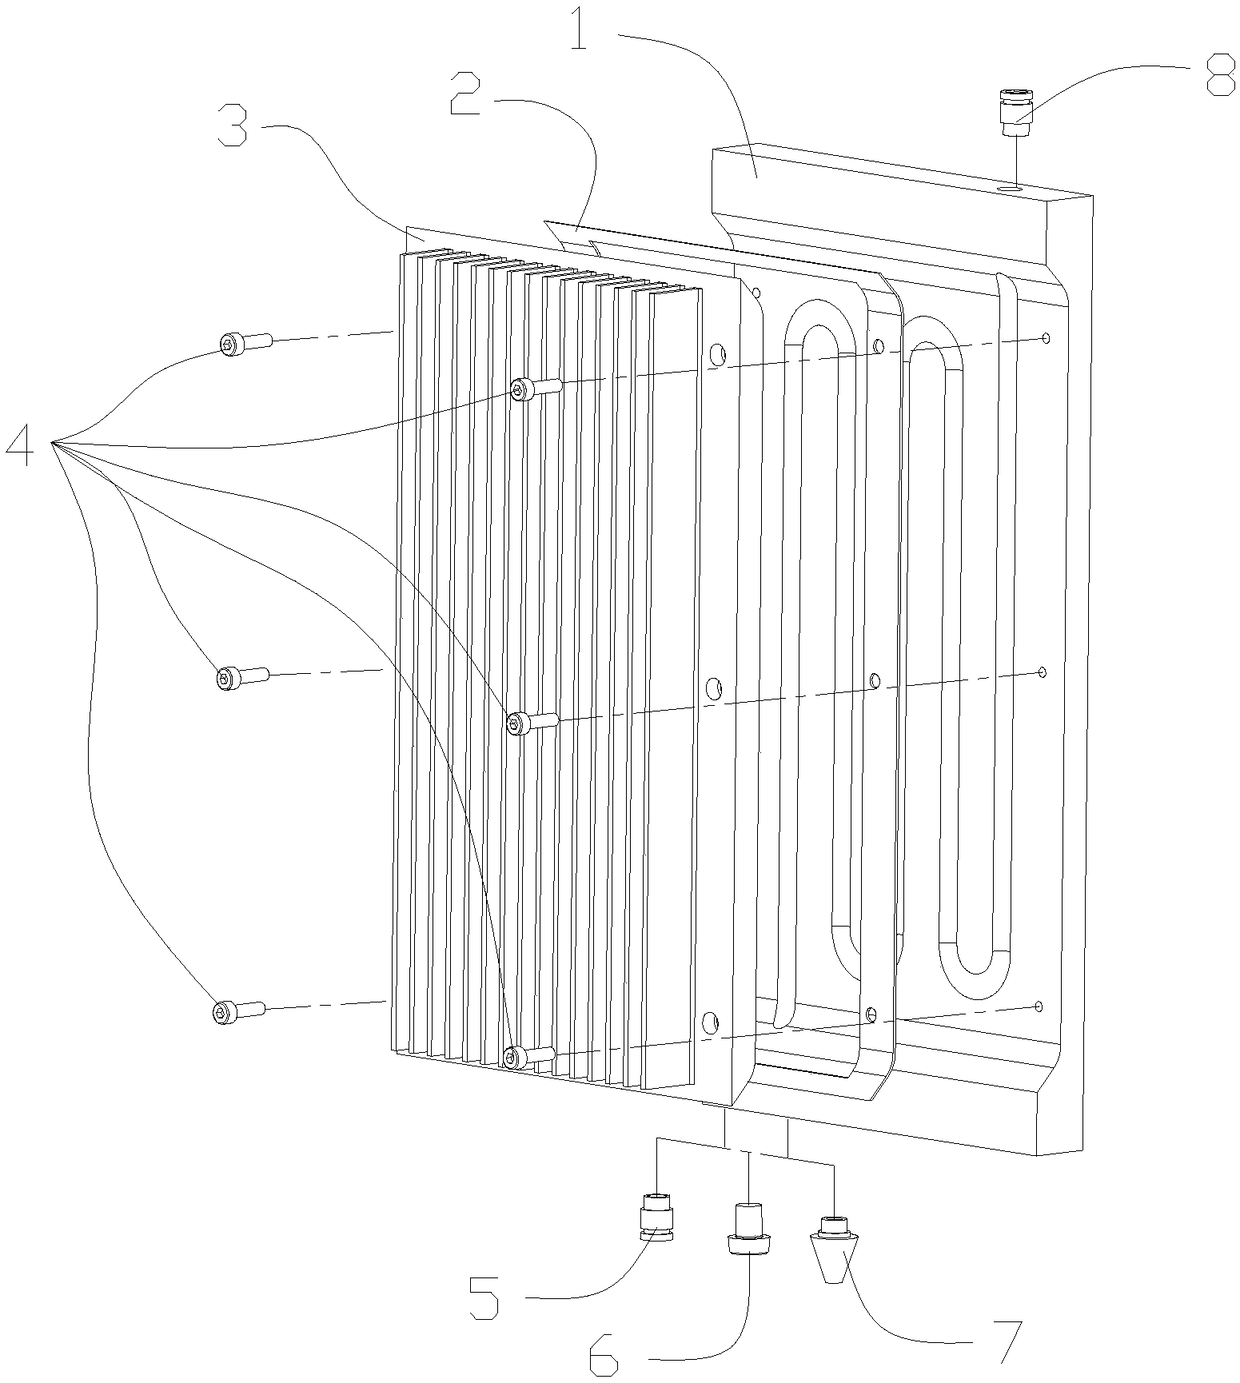 Heat dissipation device using an external air source